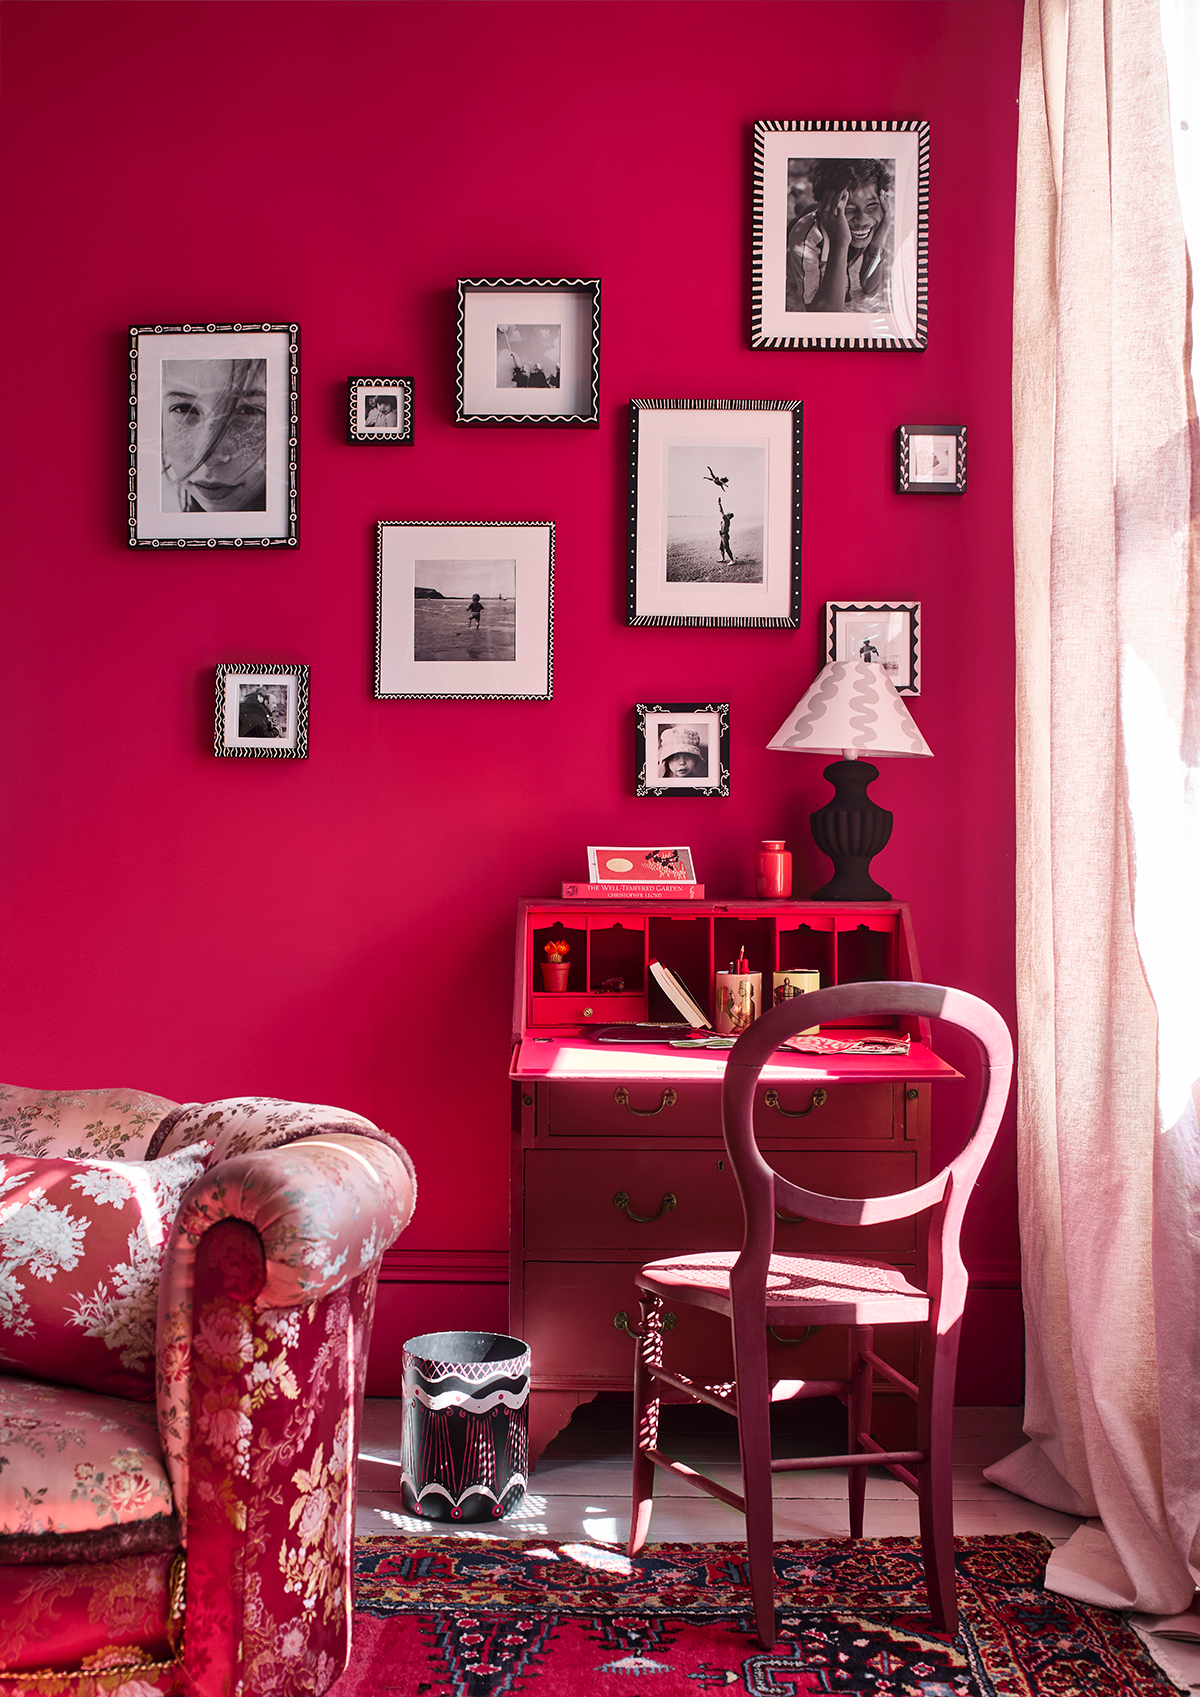 Annie Sloan Wall Paint- Capri Pink